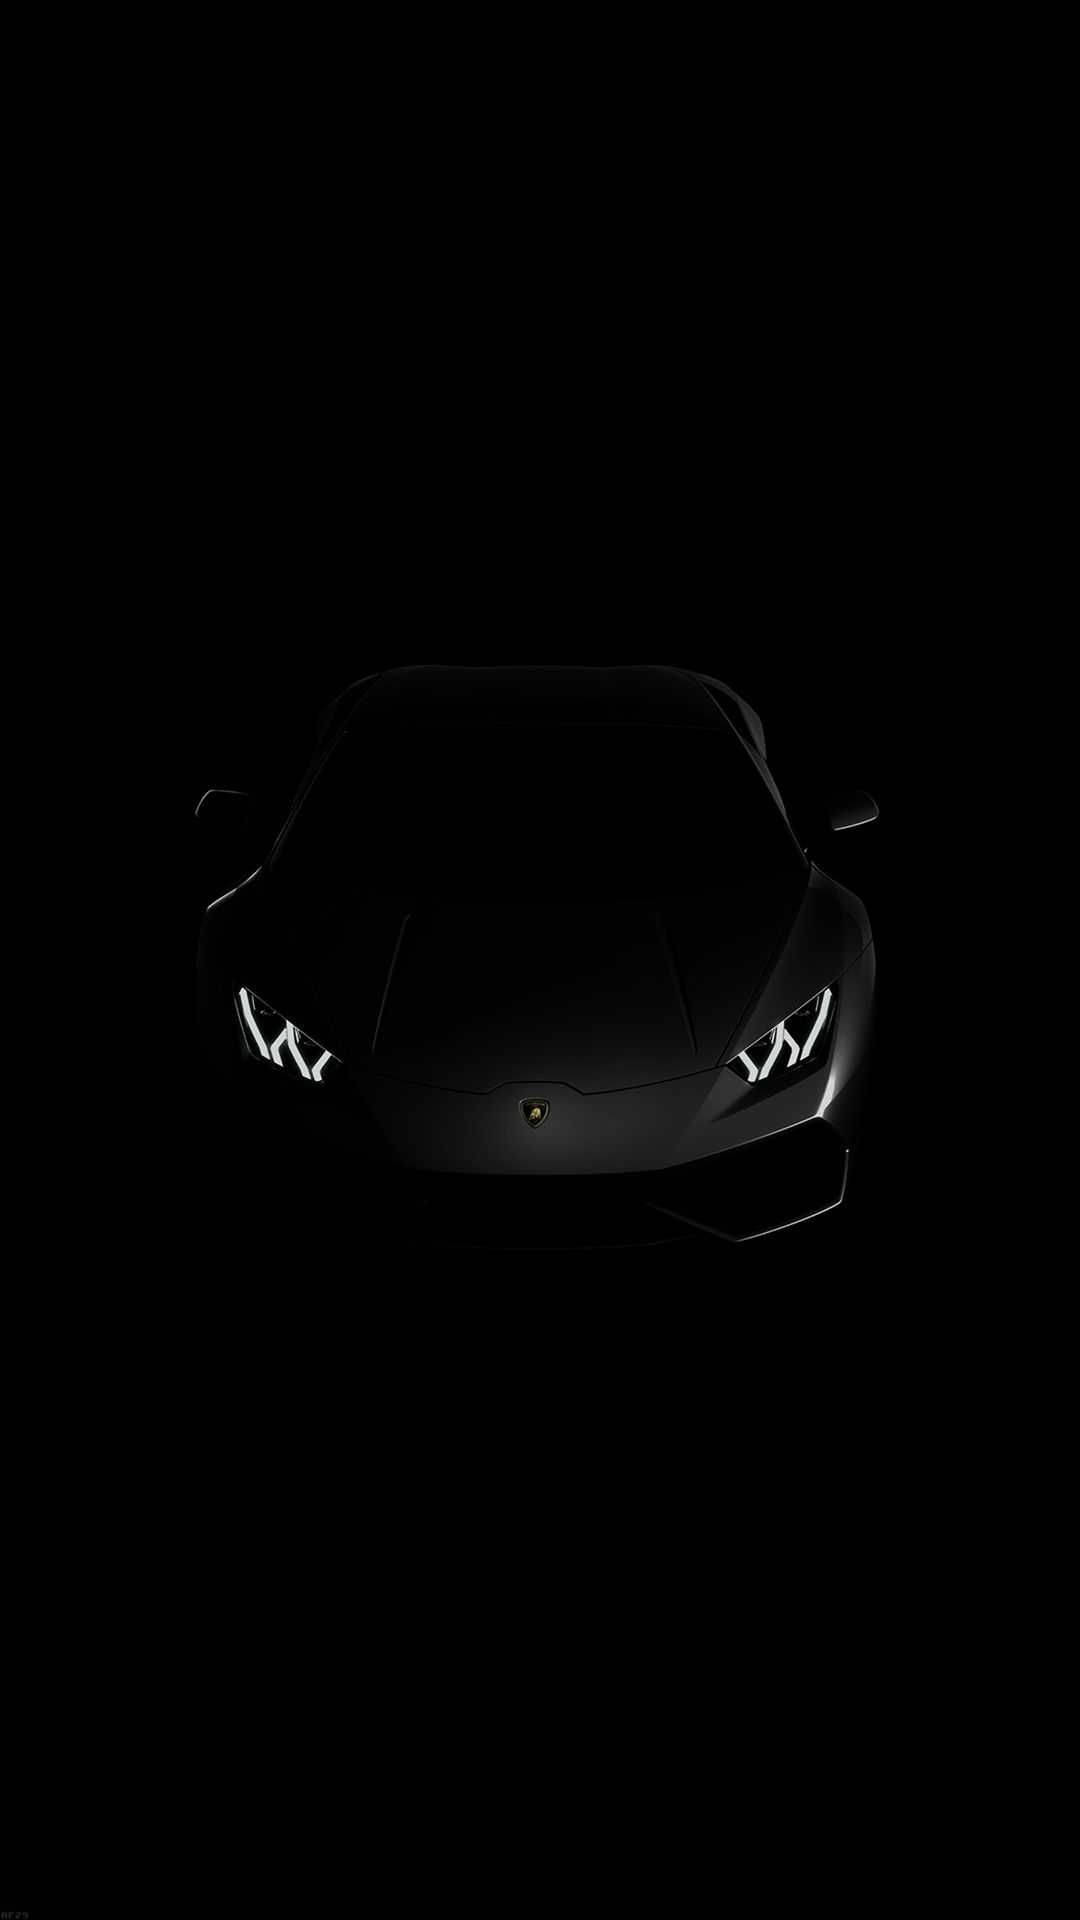 kanker Bel terug accessoires Download Minimal Matte Black Lamborghini Aventador Wallpaper | Wallpapers .com